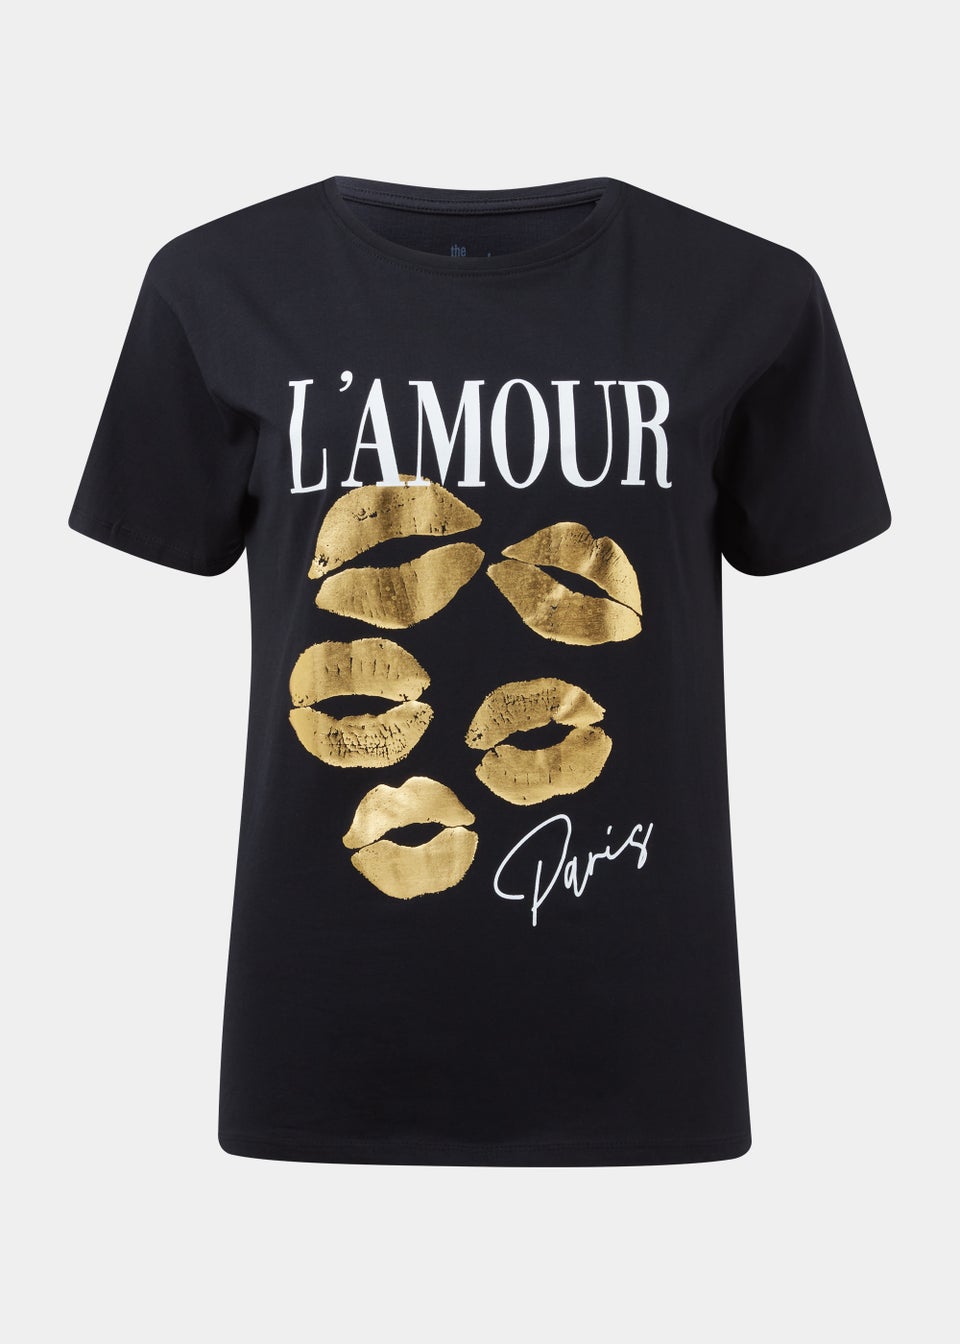 Black Lips L'Amour Paris T-Shirt - Matalan